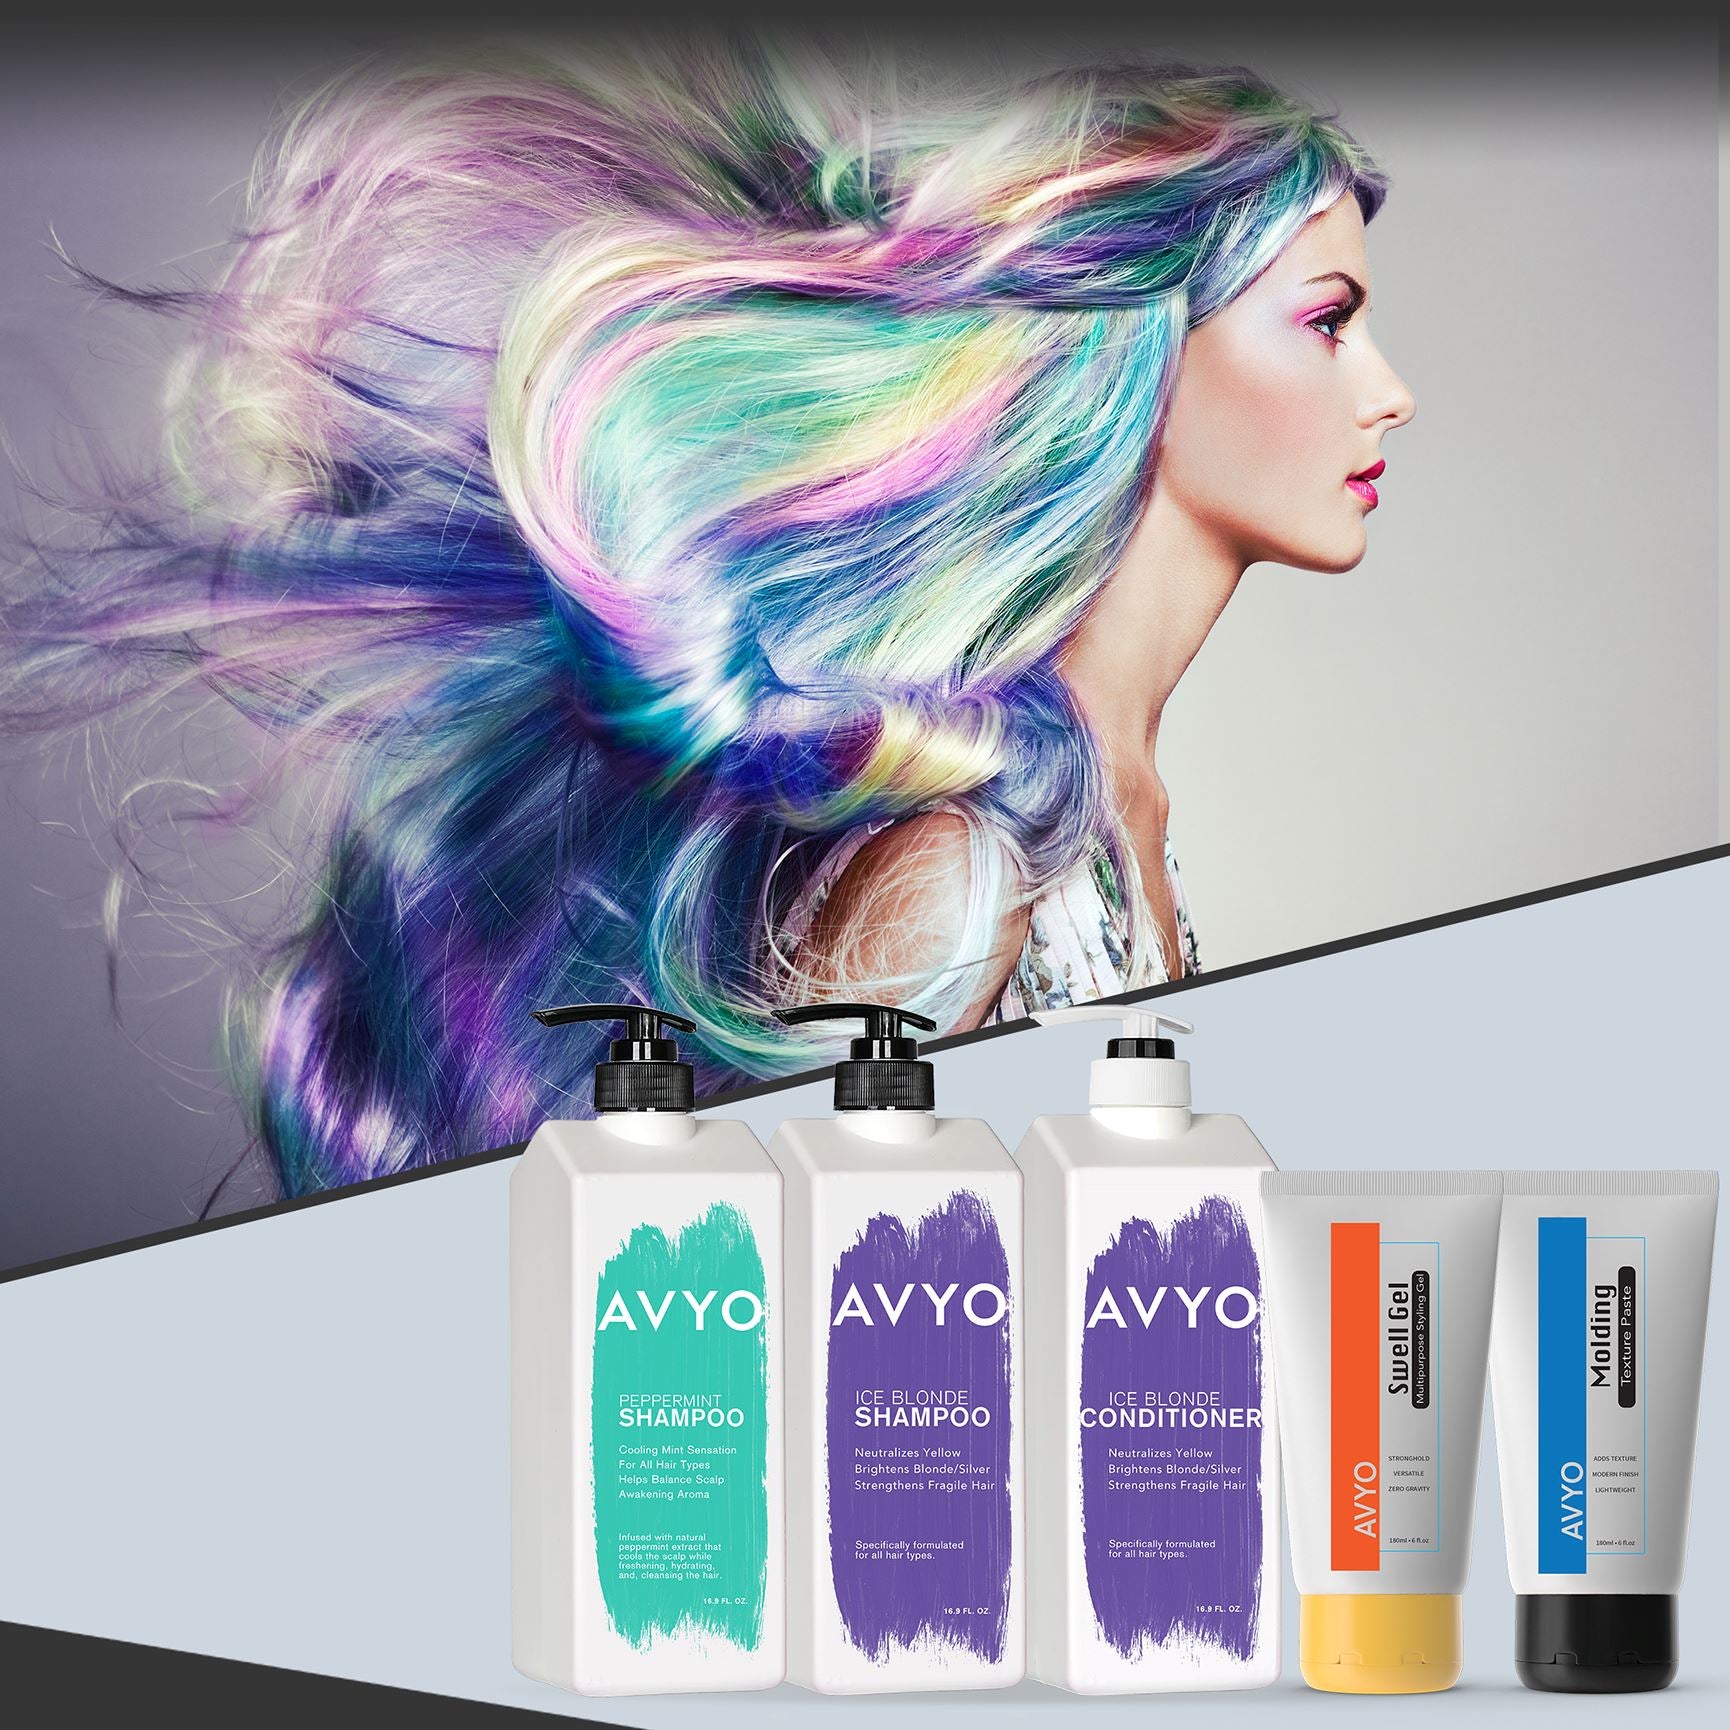 AVYO Products